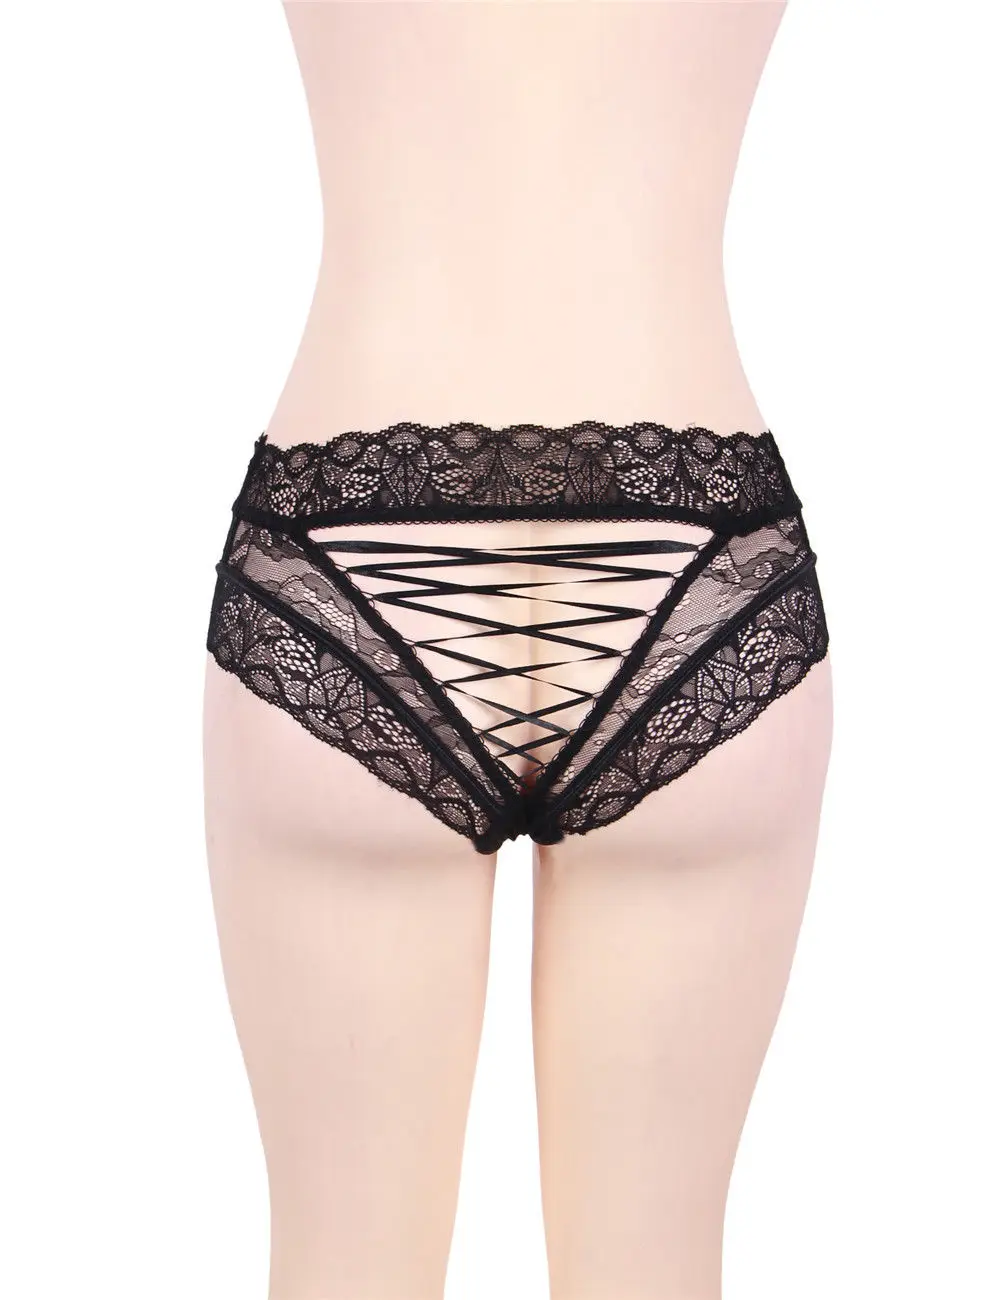 Black Corset Lace Up Panty Sheer Floral Lace High Waist Lingerie Underwear M-3XL